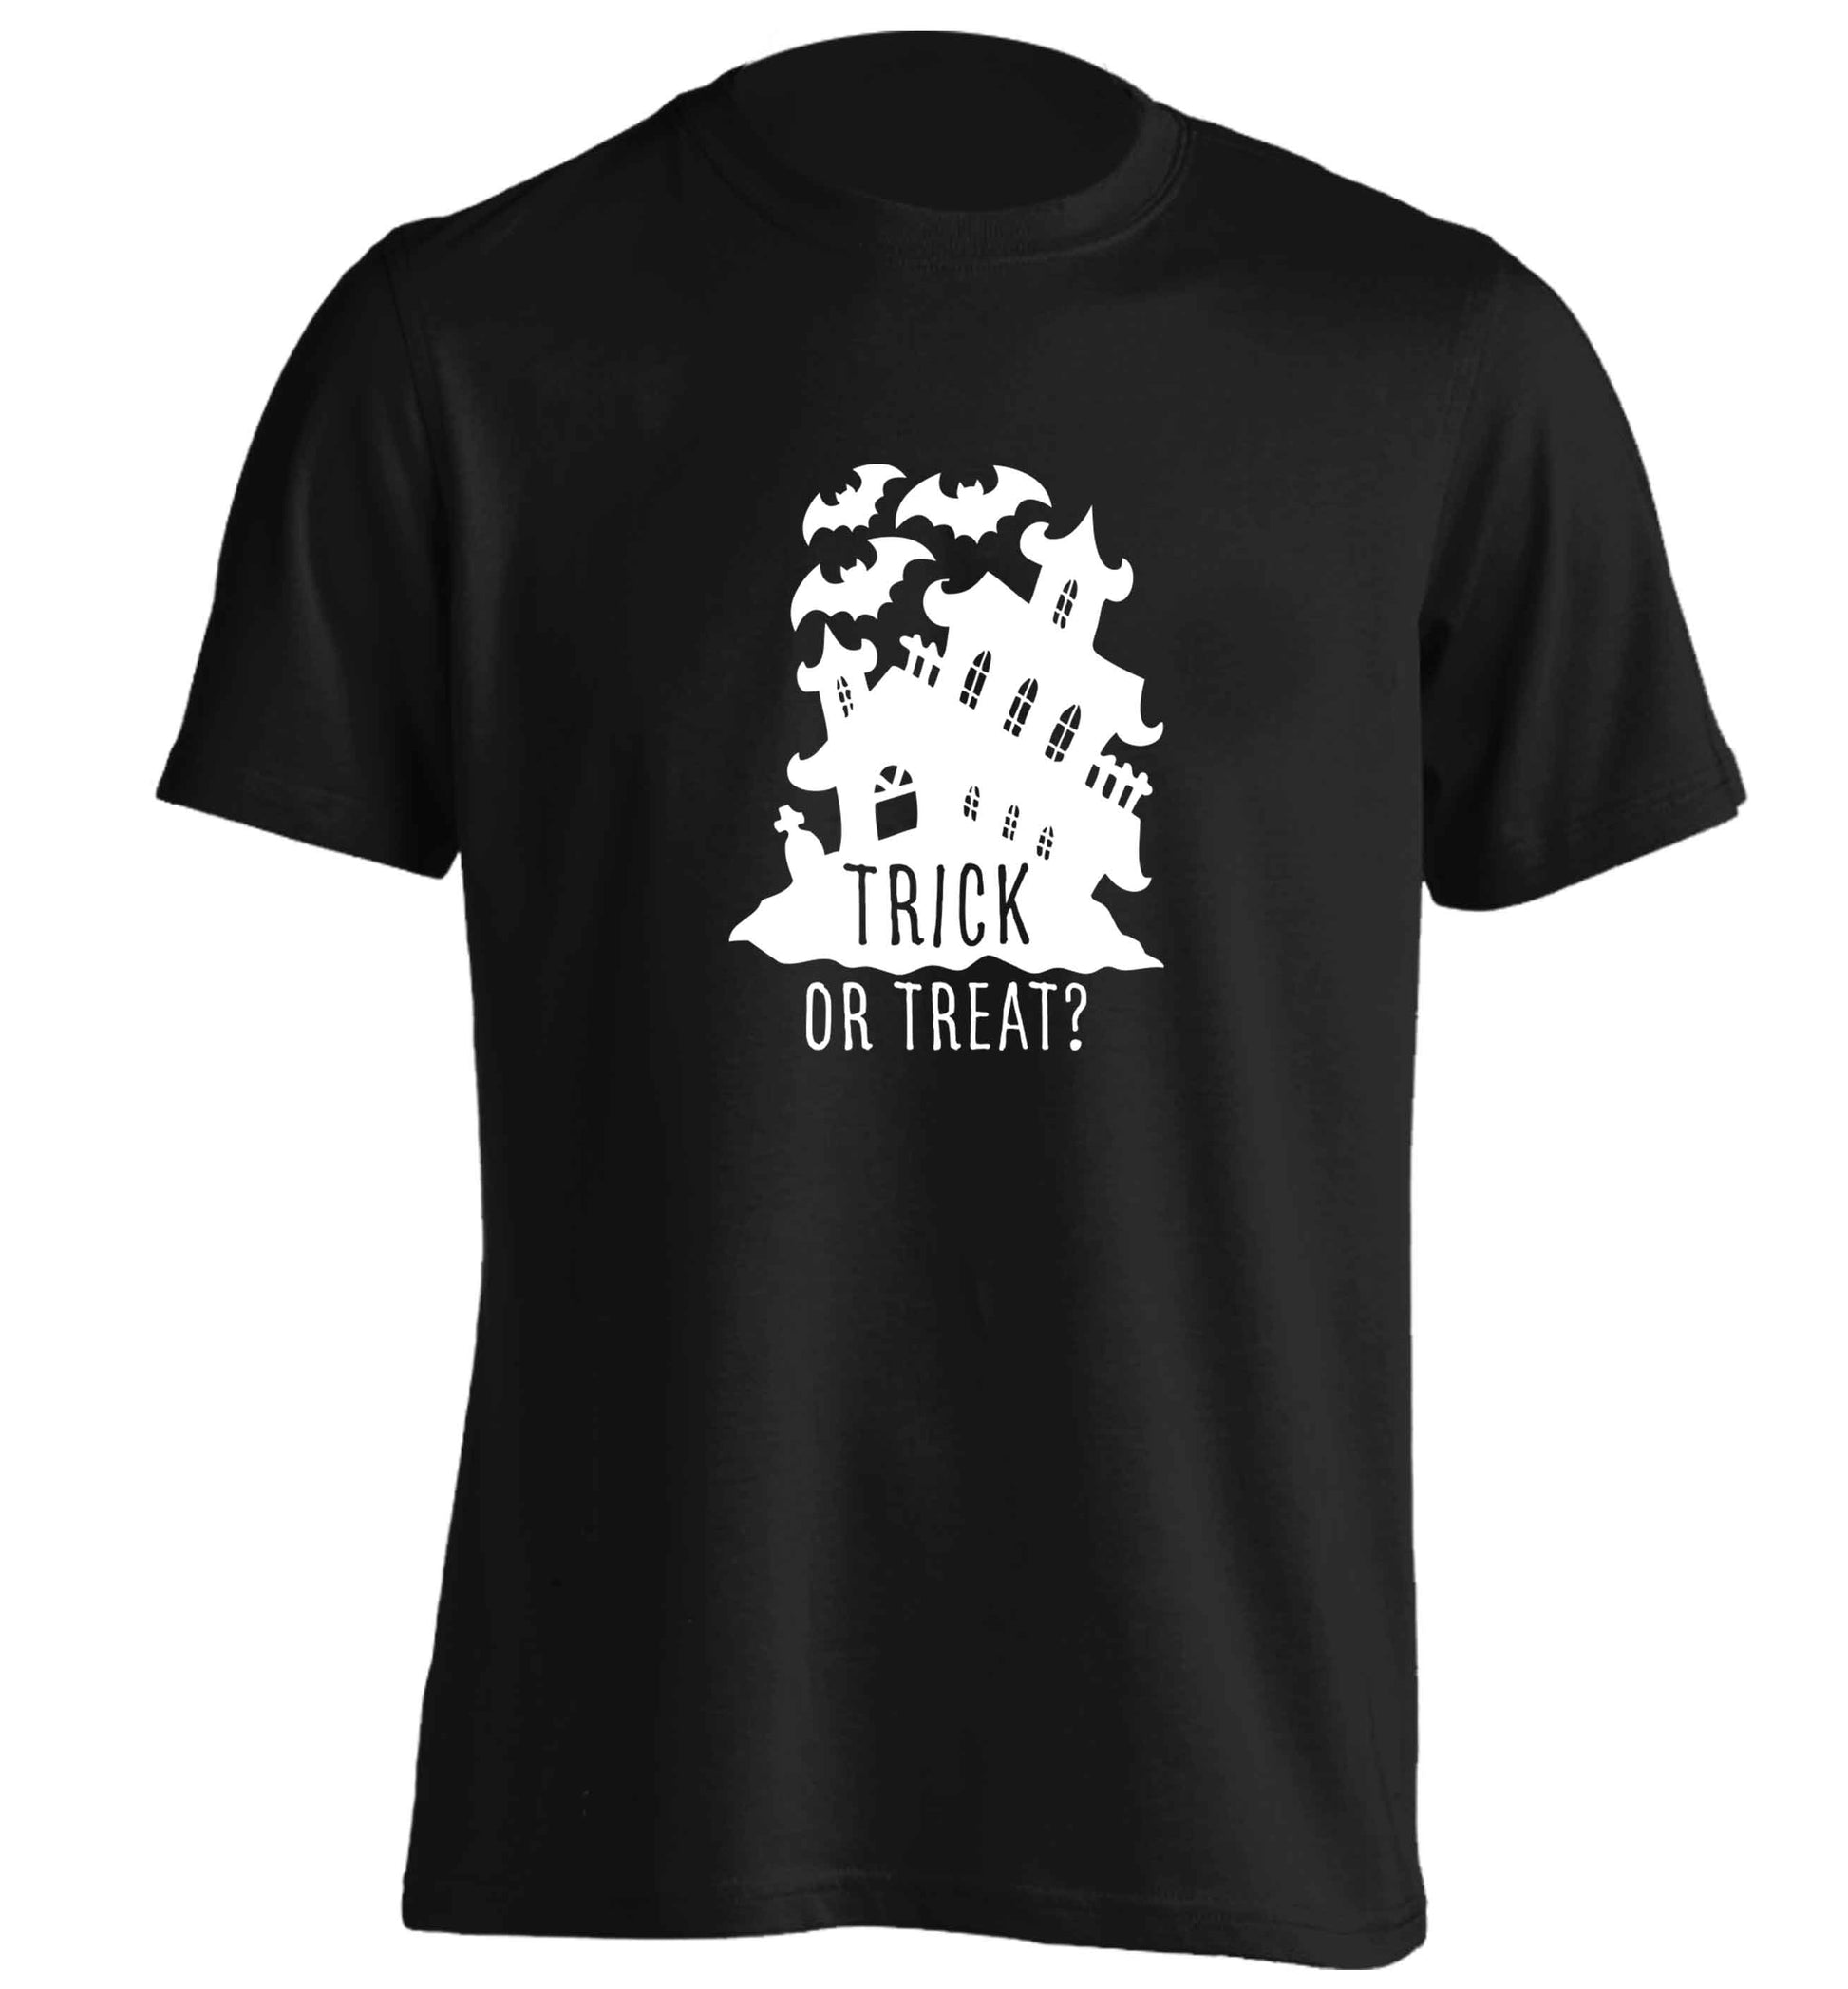 Trick or treat - haunted house adults unisex black Tshirt 2XL